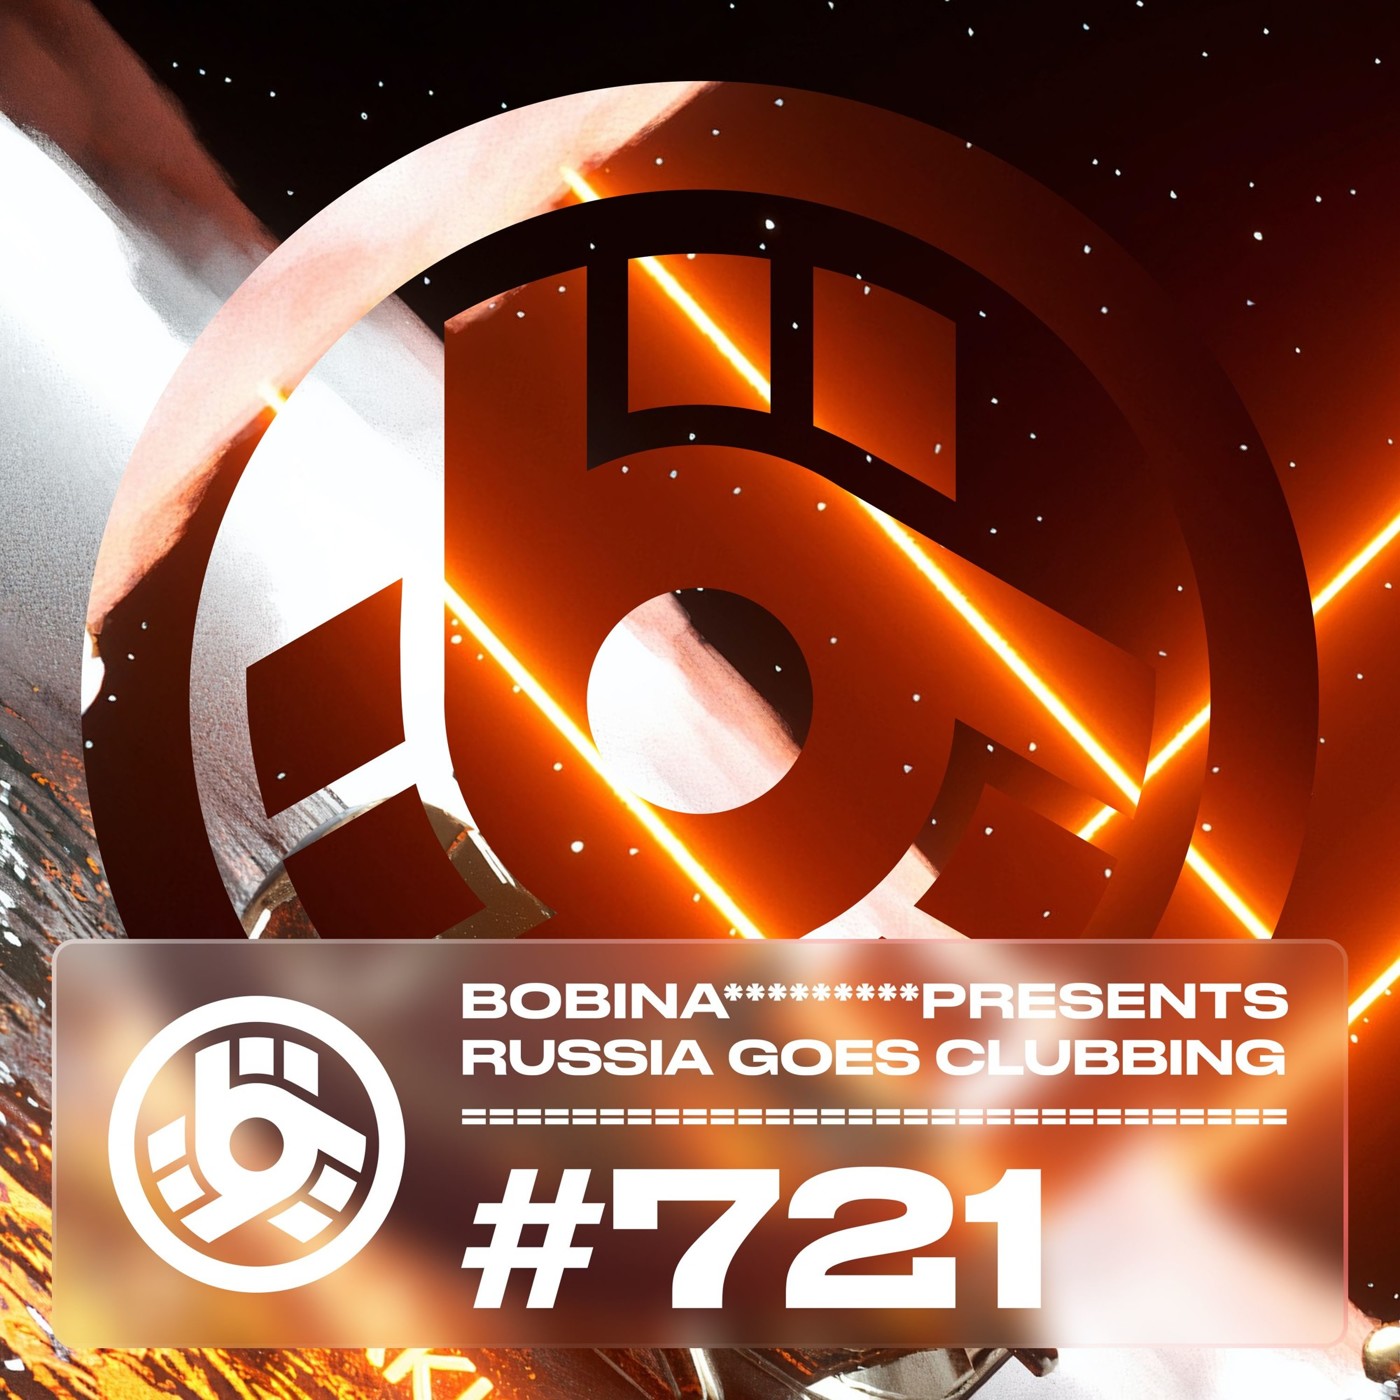 Russia Goes Clubbing #721